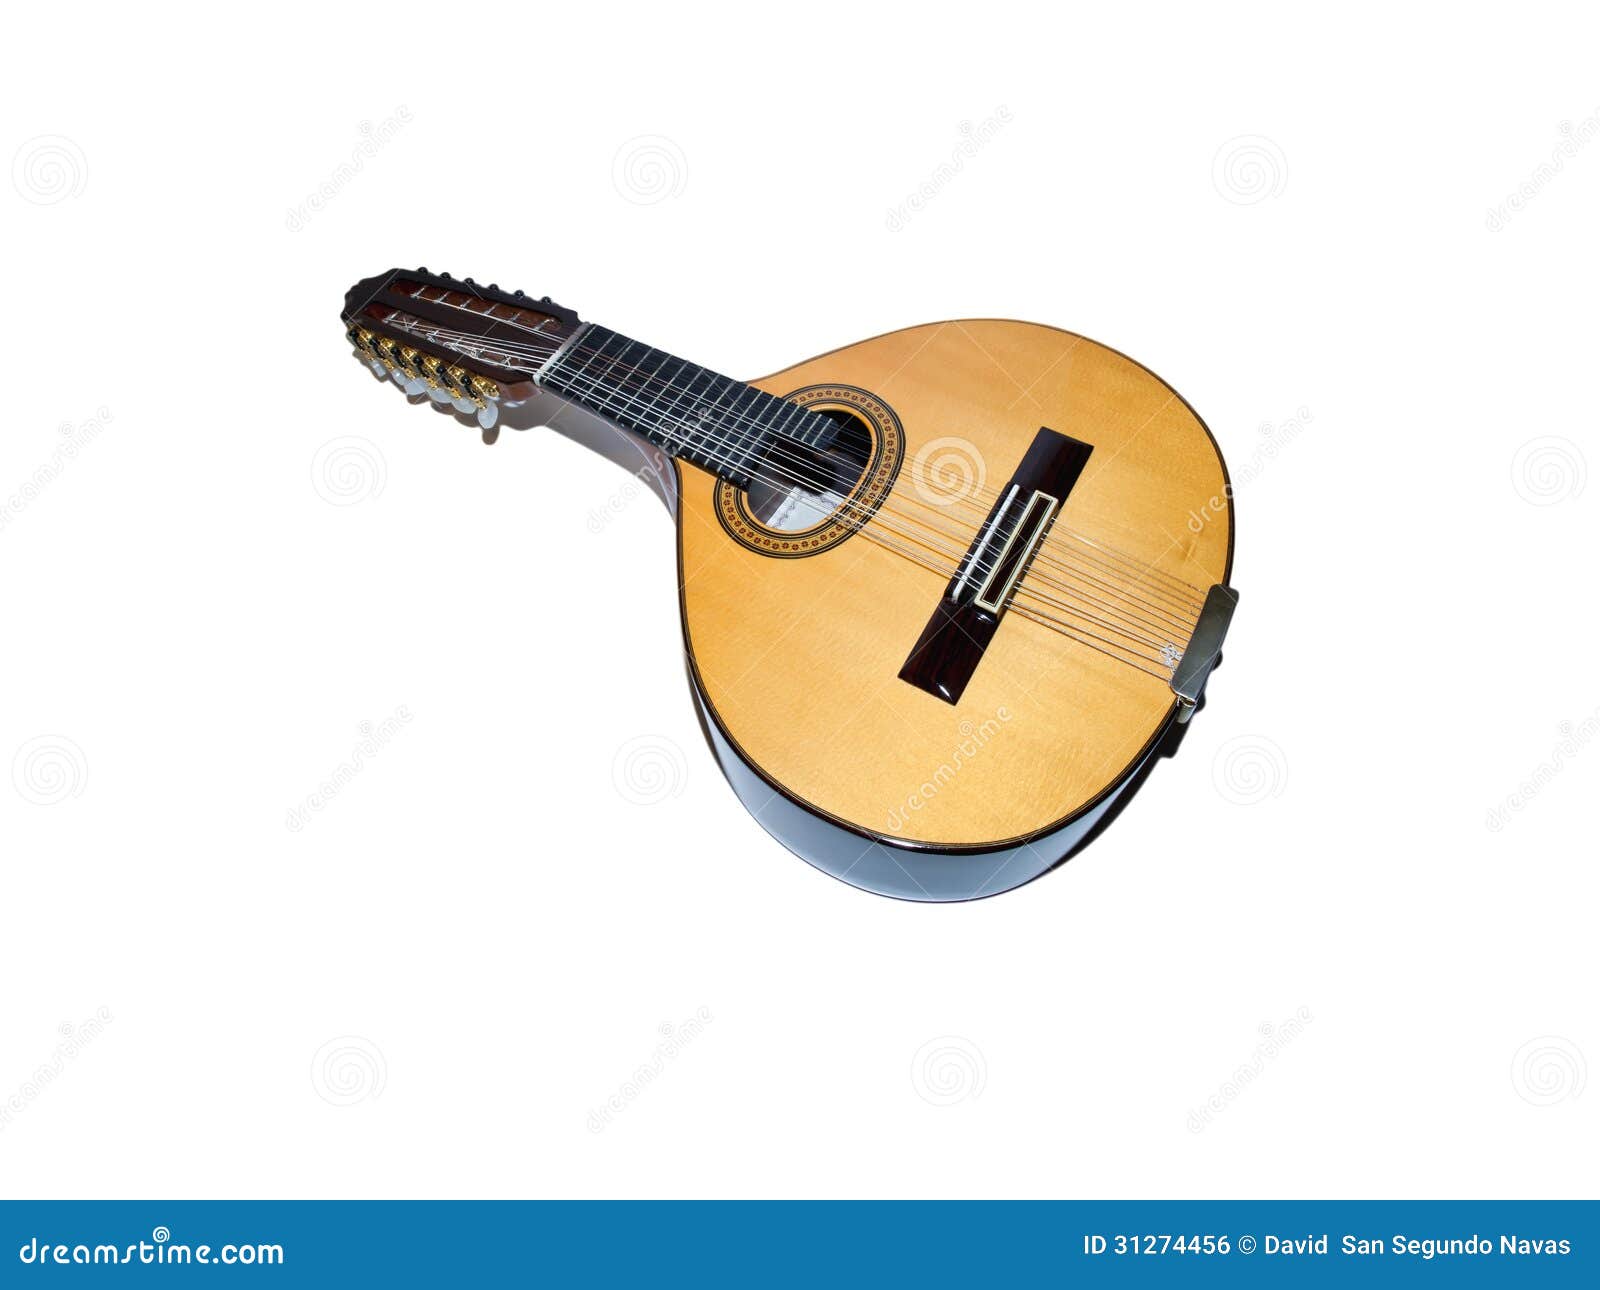 rondalla instruments laud